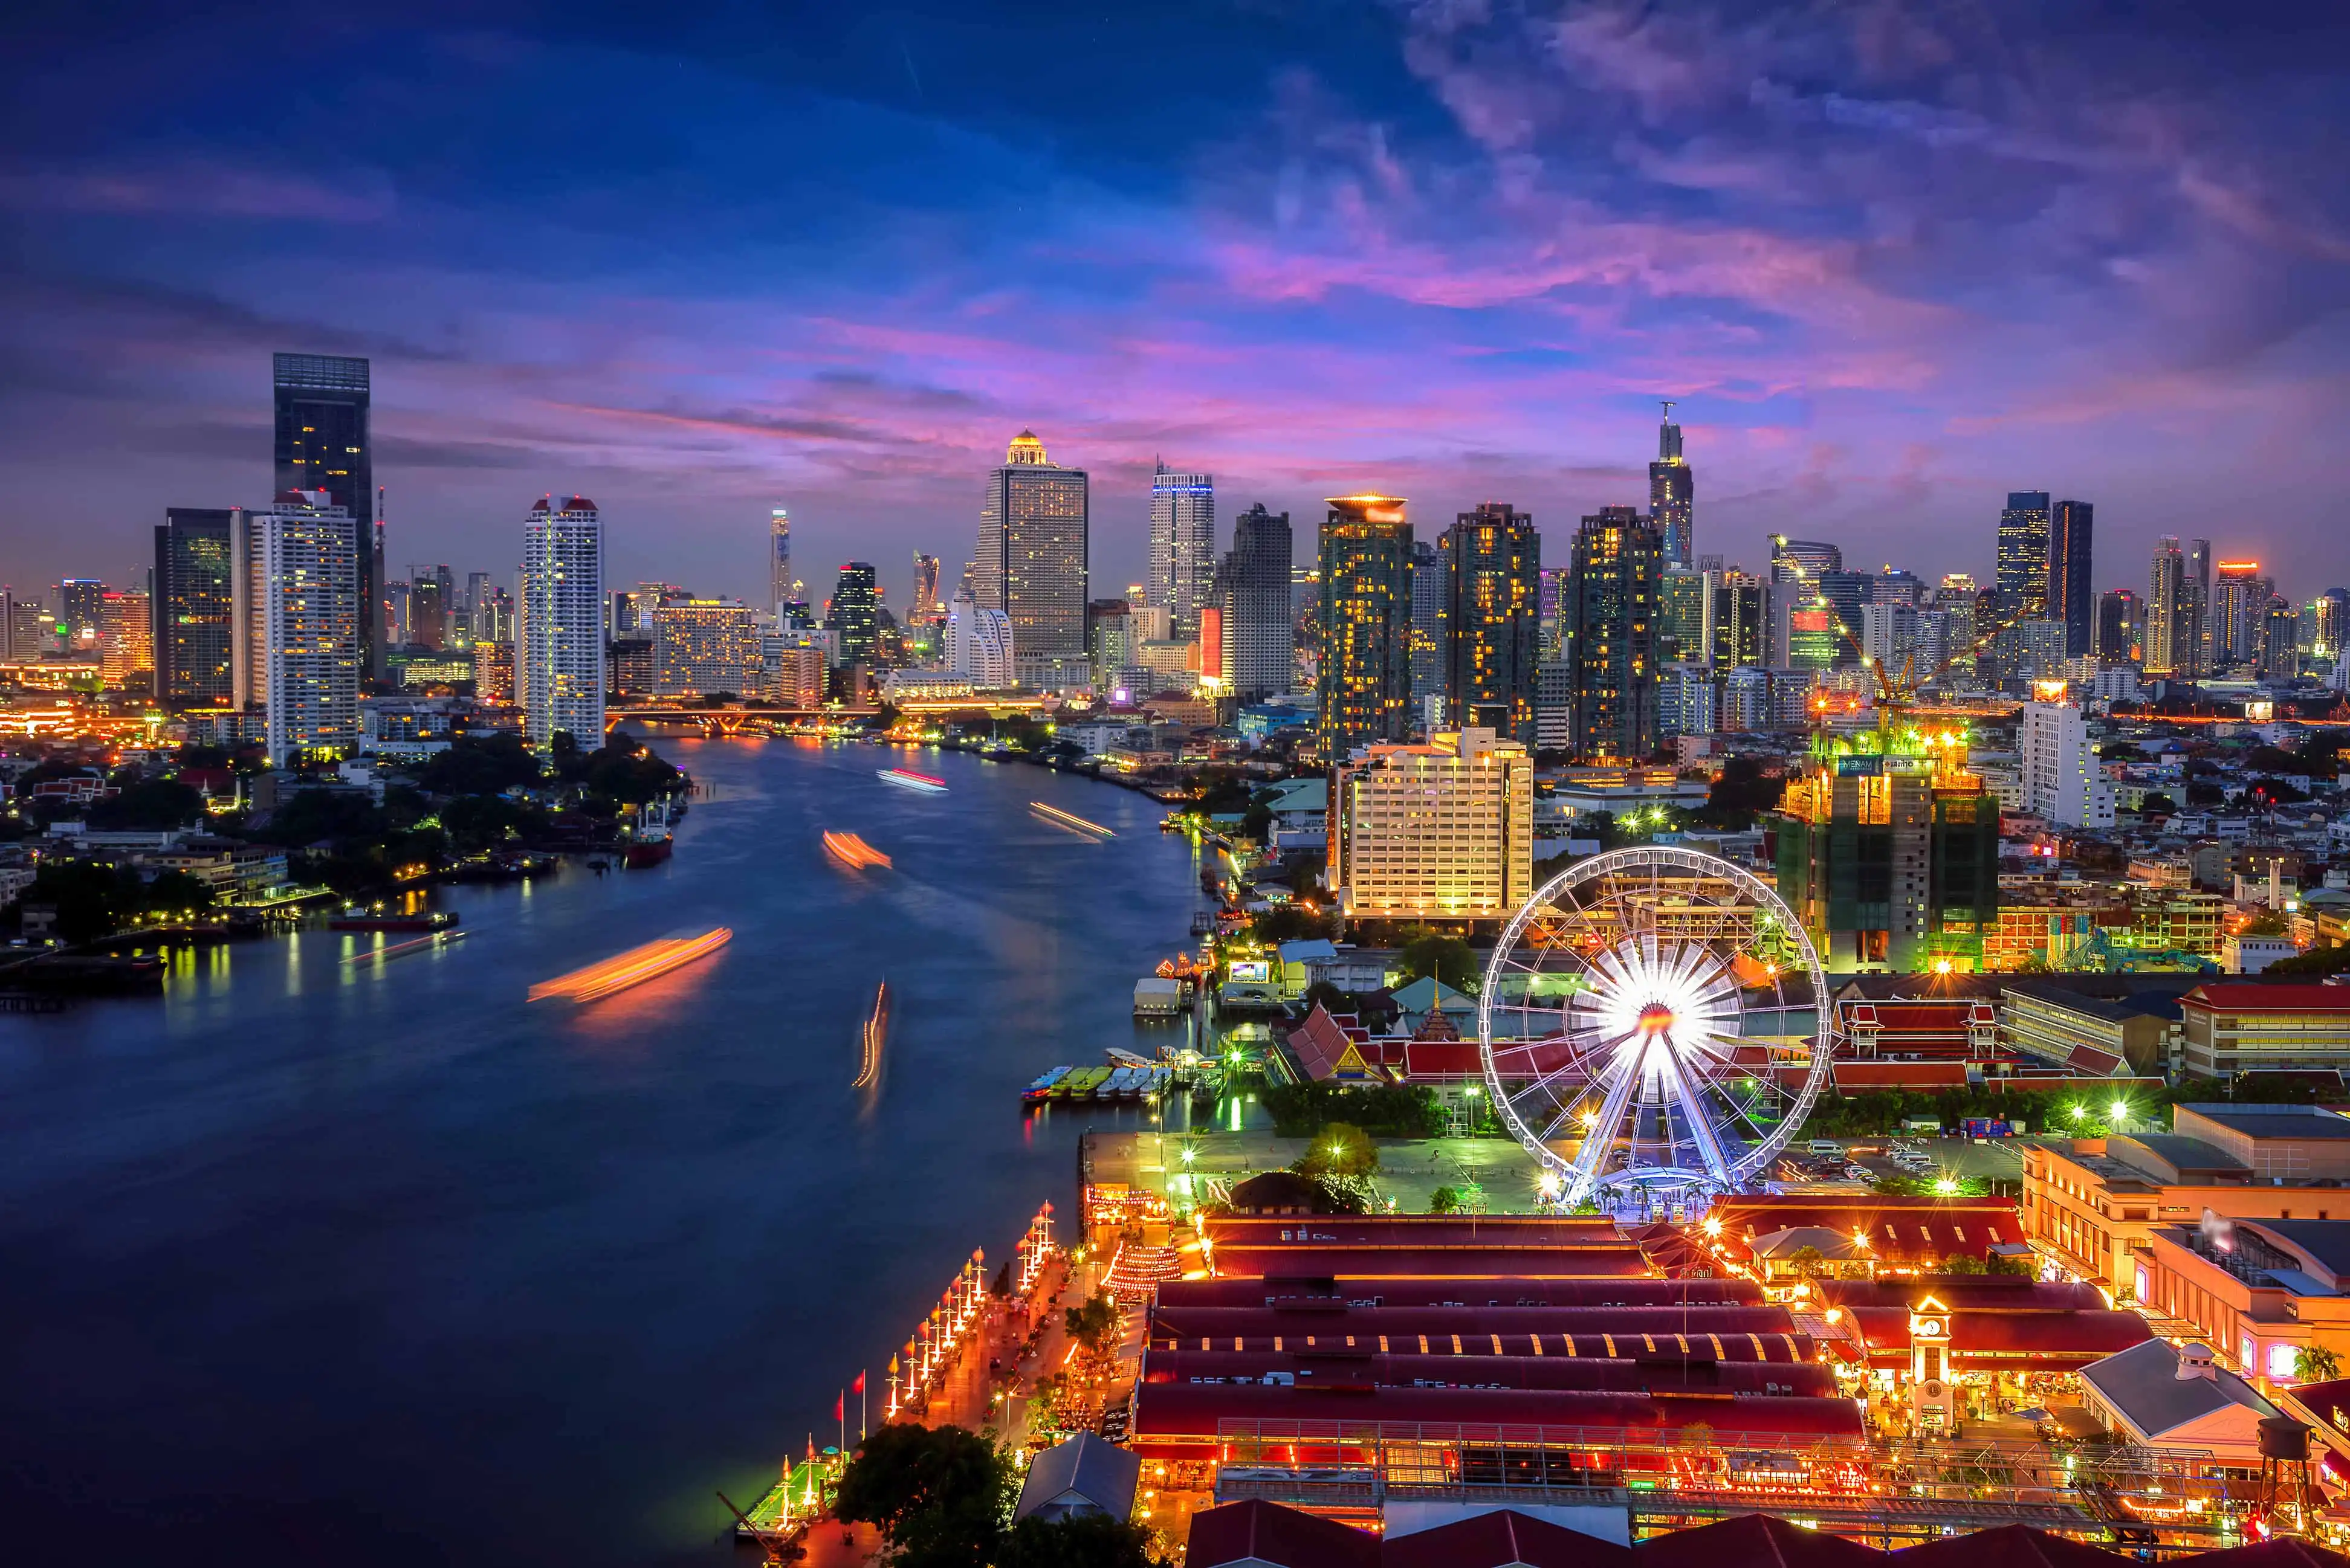 Bangkok tourism